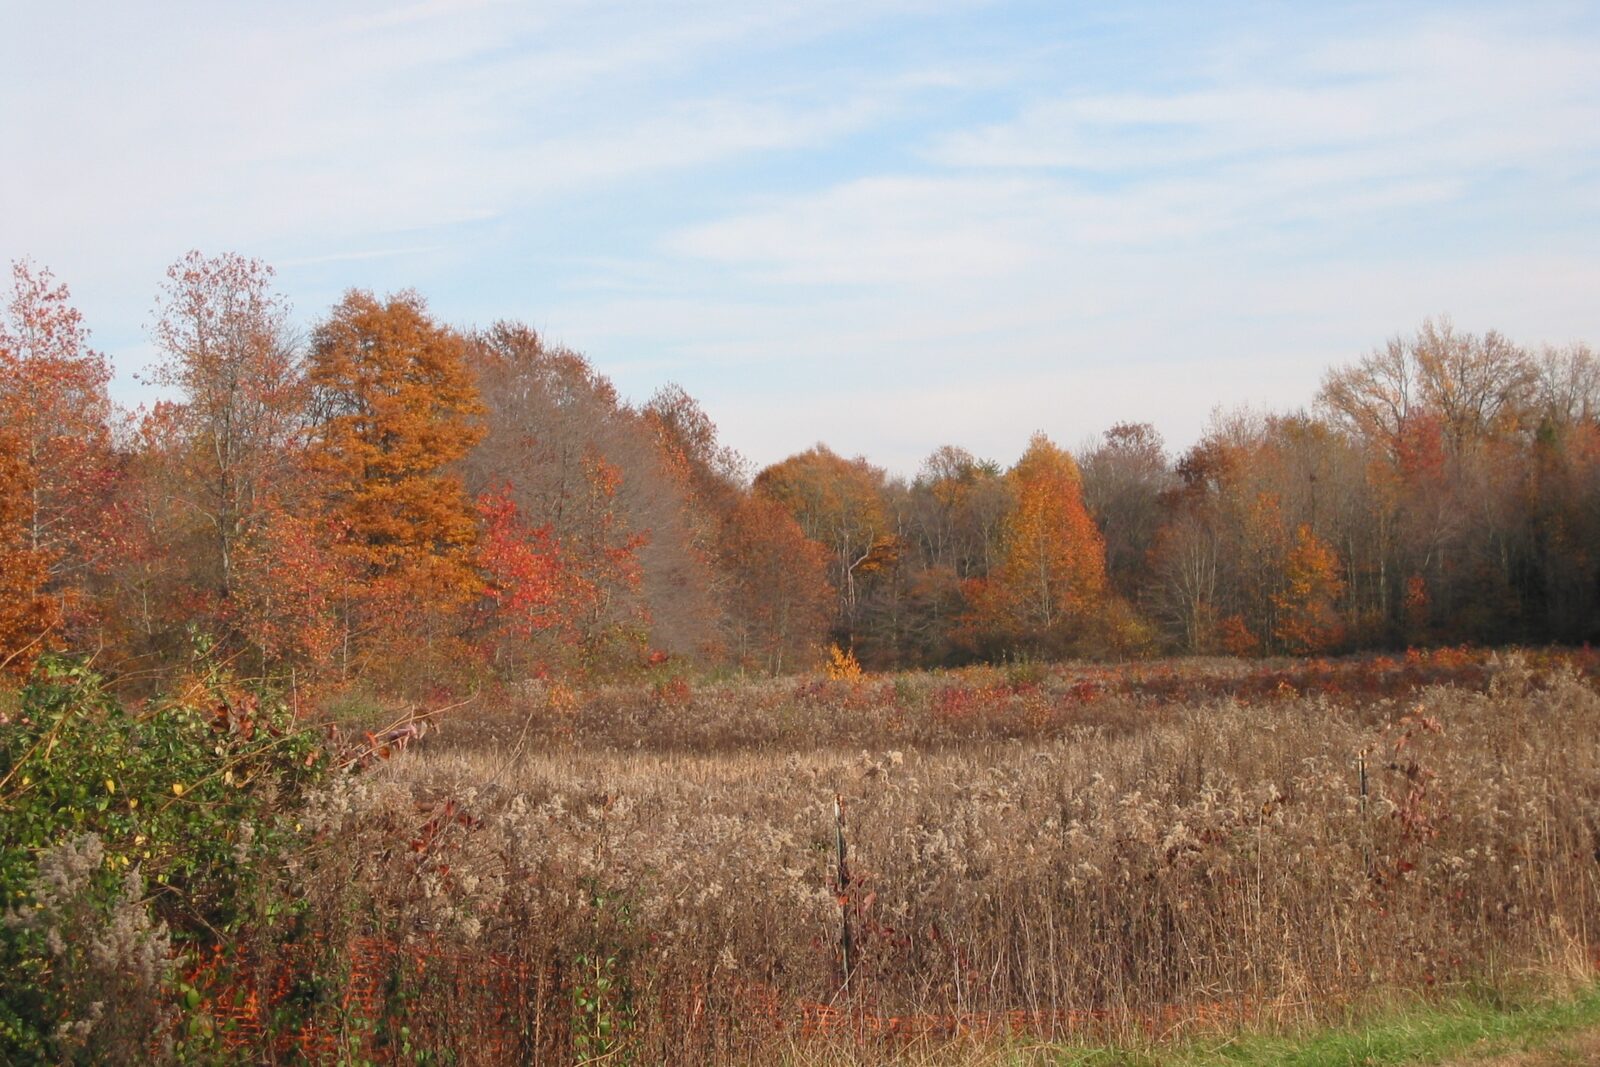 Wild Meadow on a Farm near Ark Road